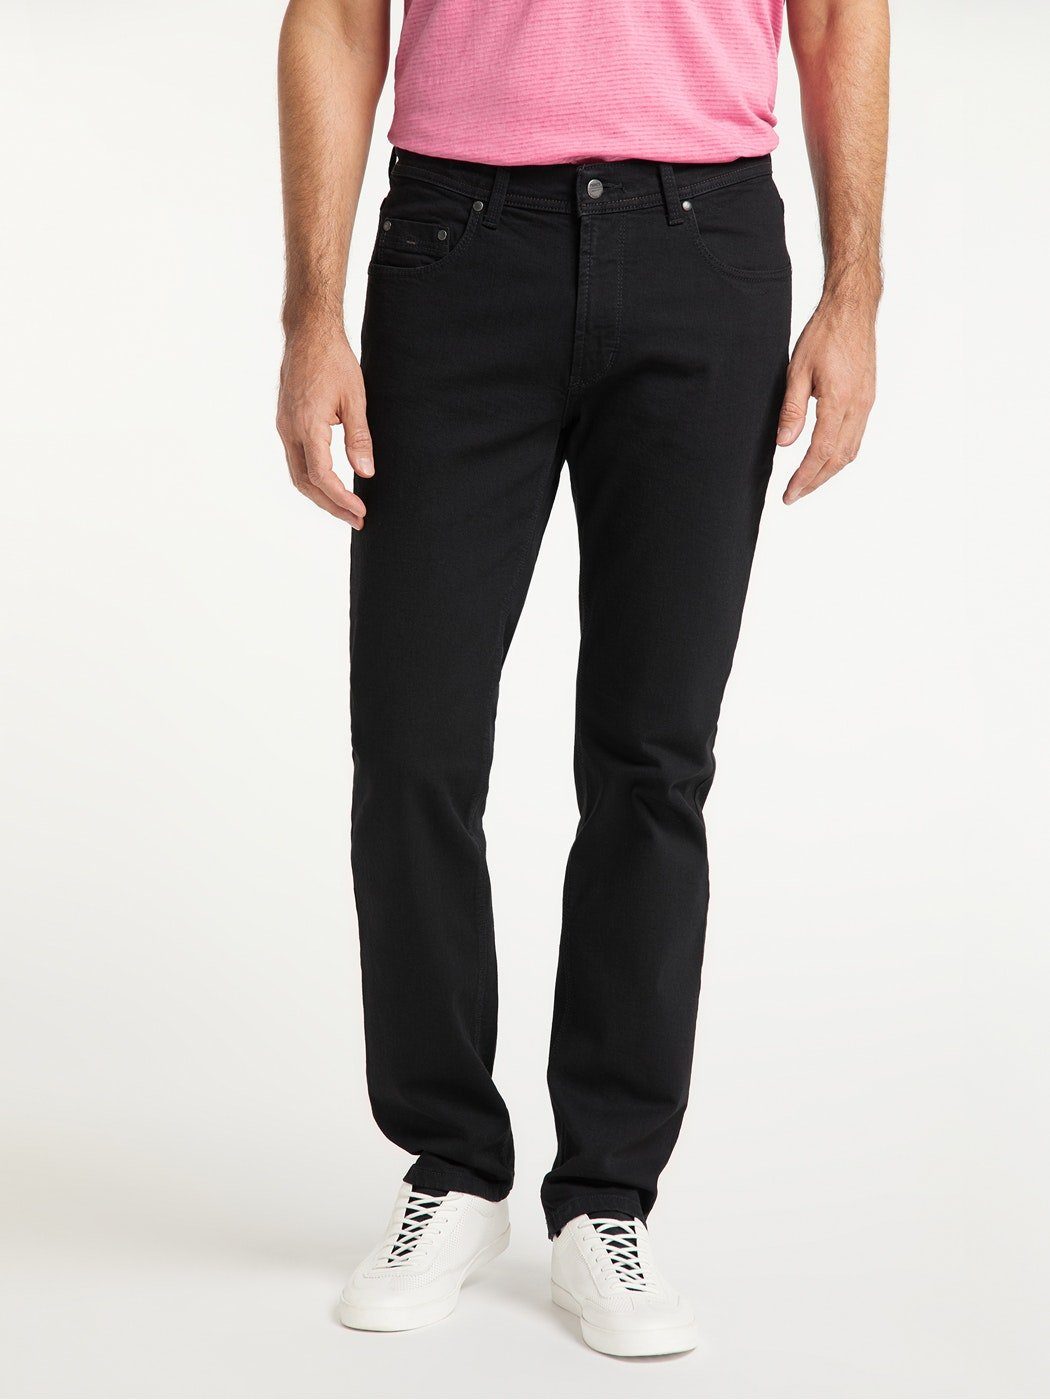 Pioneer Authentic Jeans black 1680 5-Pocket-Jeans Übergrößen/Überlängen PIONEER 9403.05 RANDO